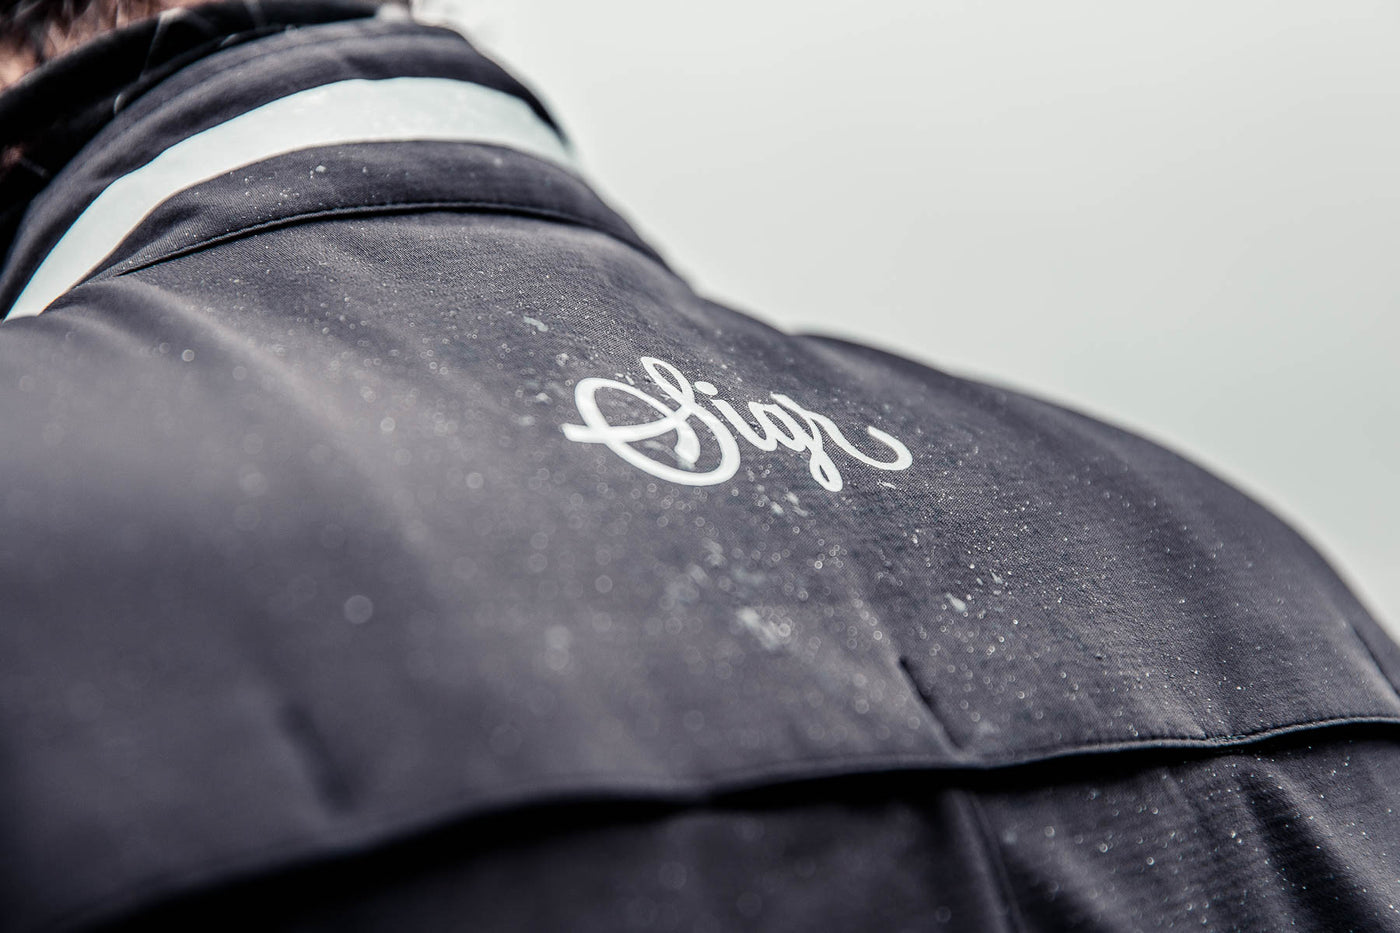 Sigr Gotlandsleden City - Black Soft Shell Merino Cycling Jacket for Men